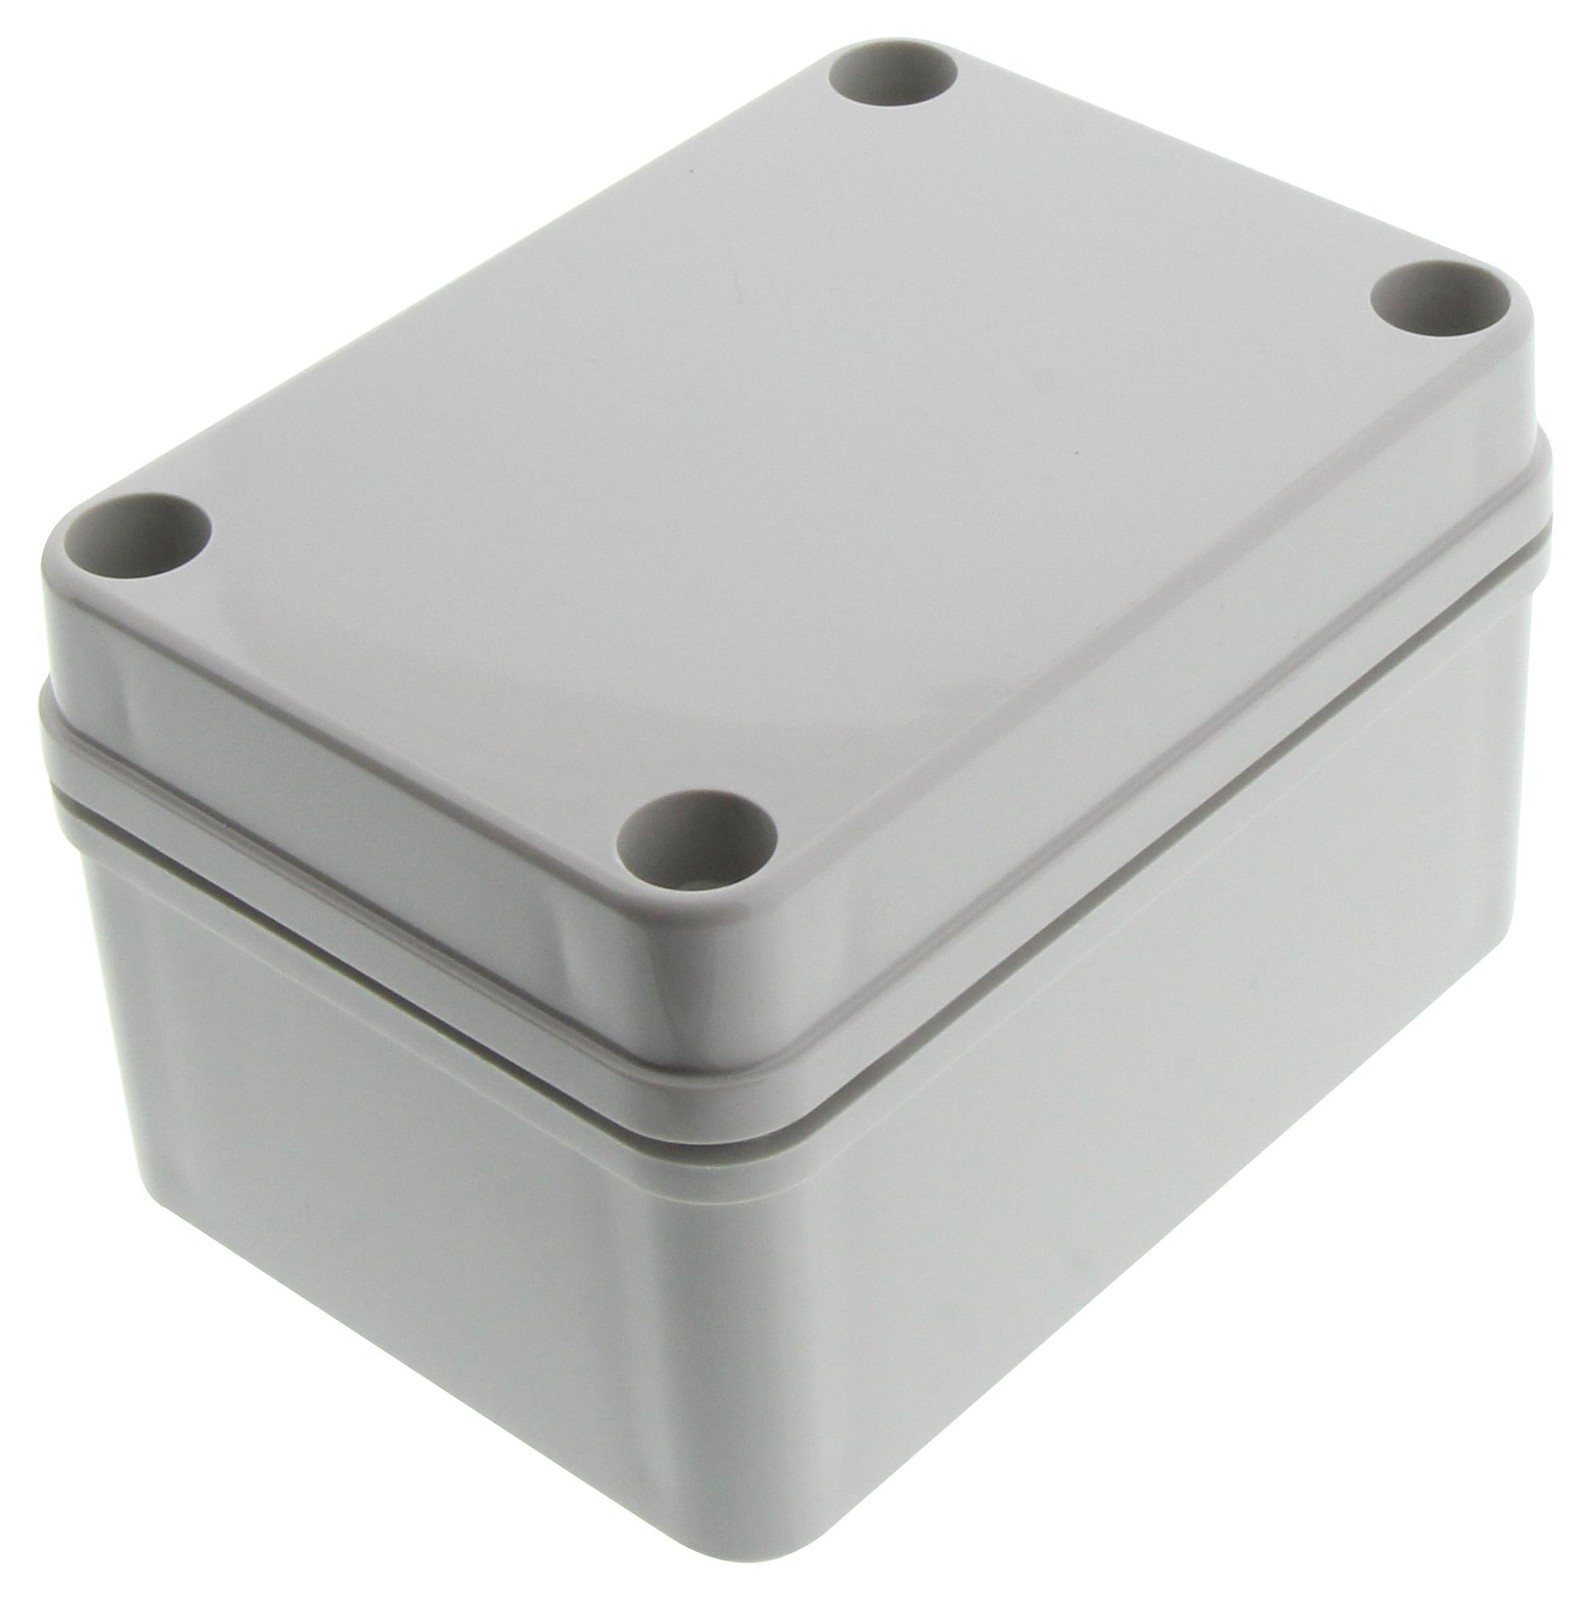 Fibox Abs B 65 G Enclosure, Modular, Plastic, Gray